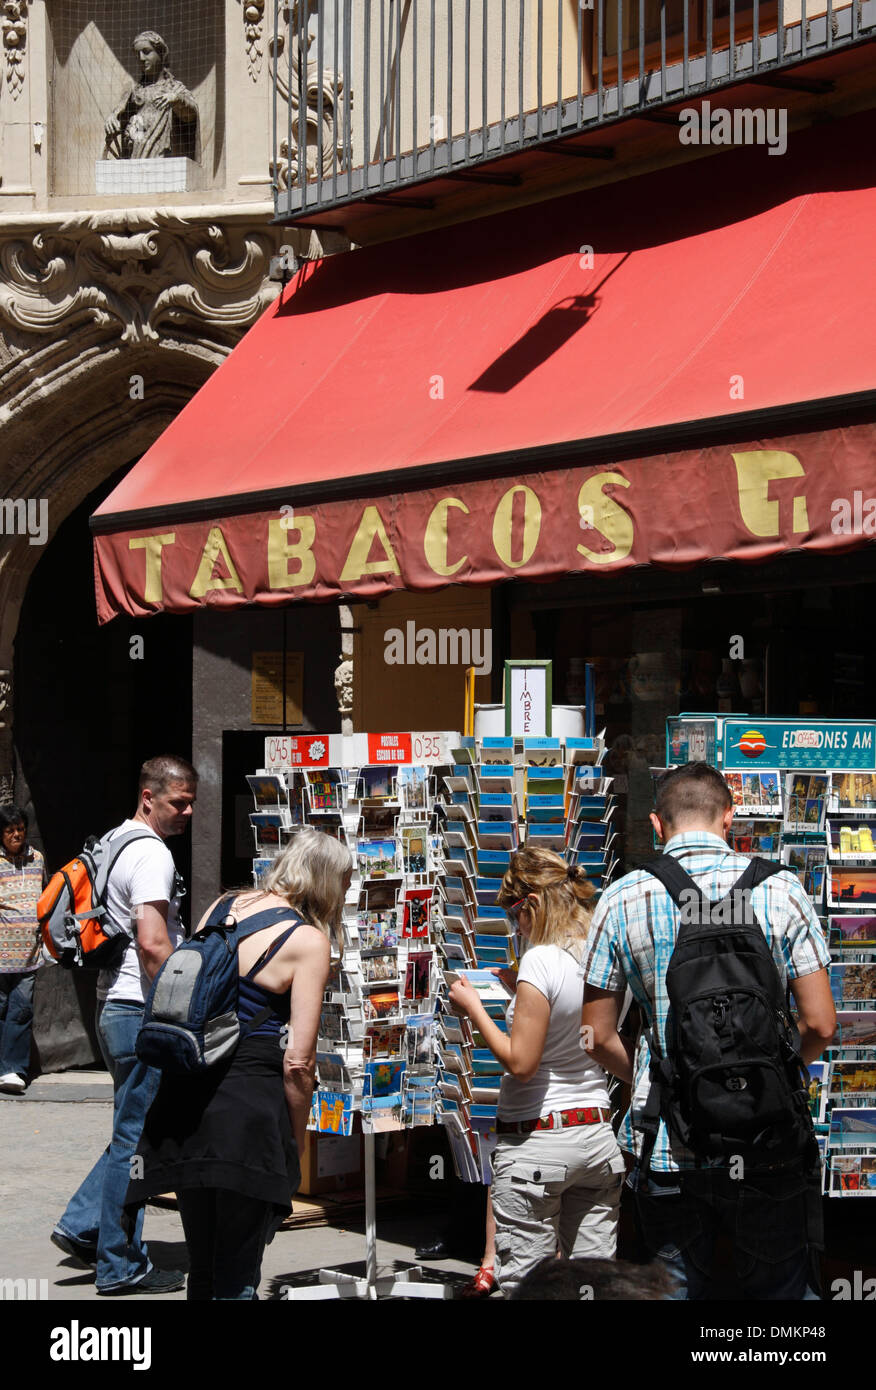 Tabaco shop, Valencia, Espagne, Europe Banque D'Images